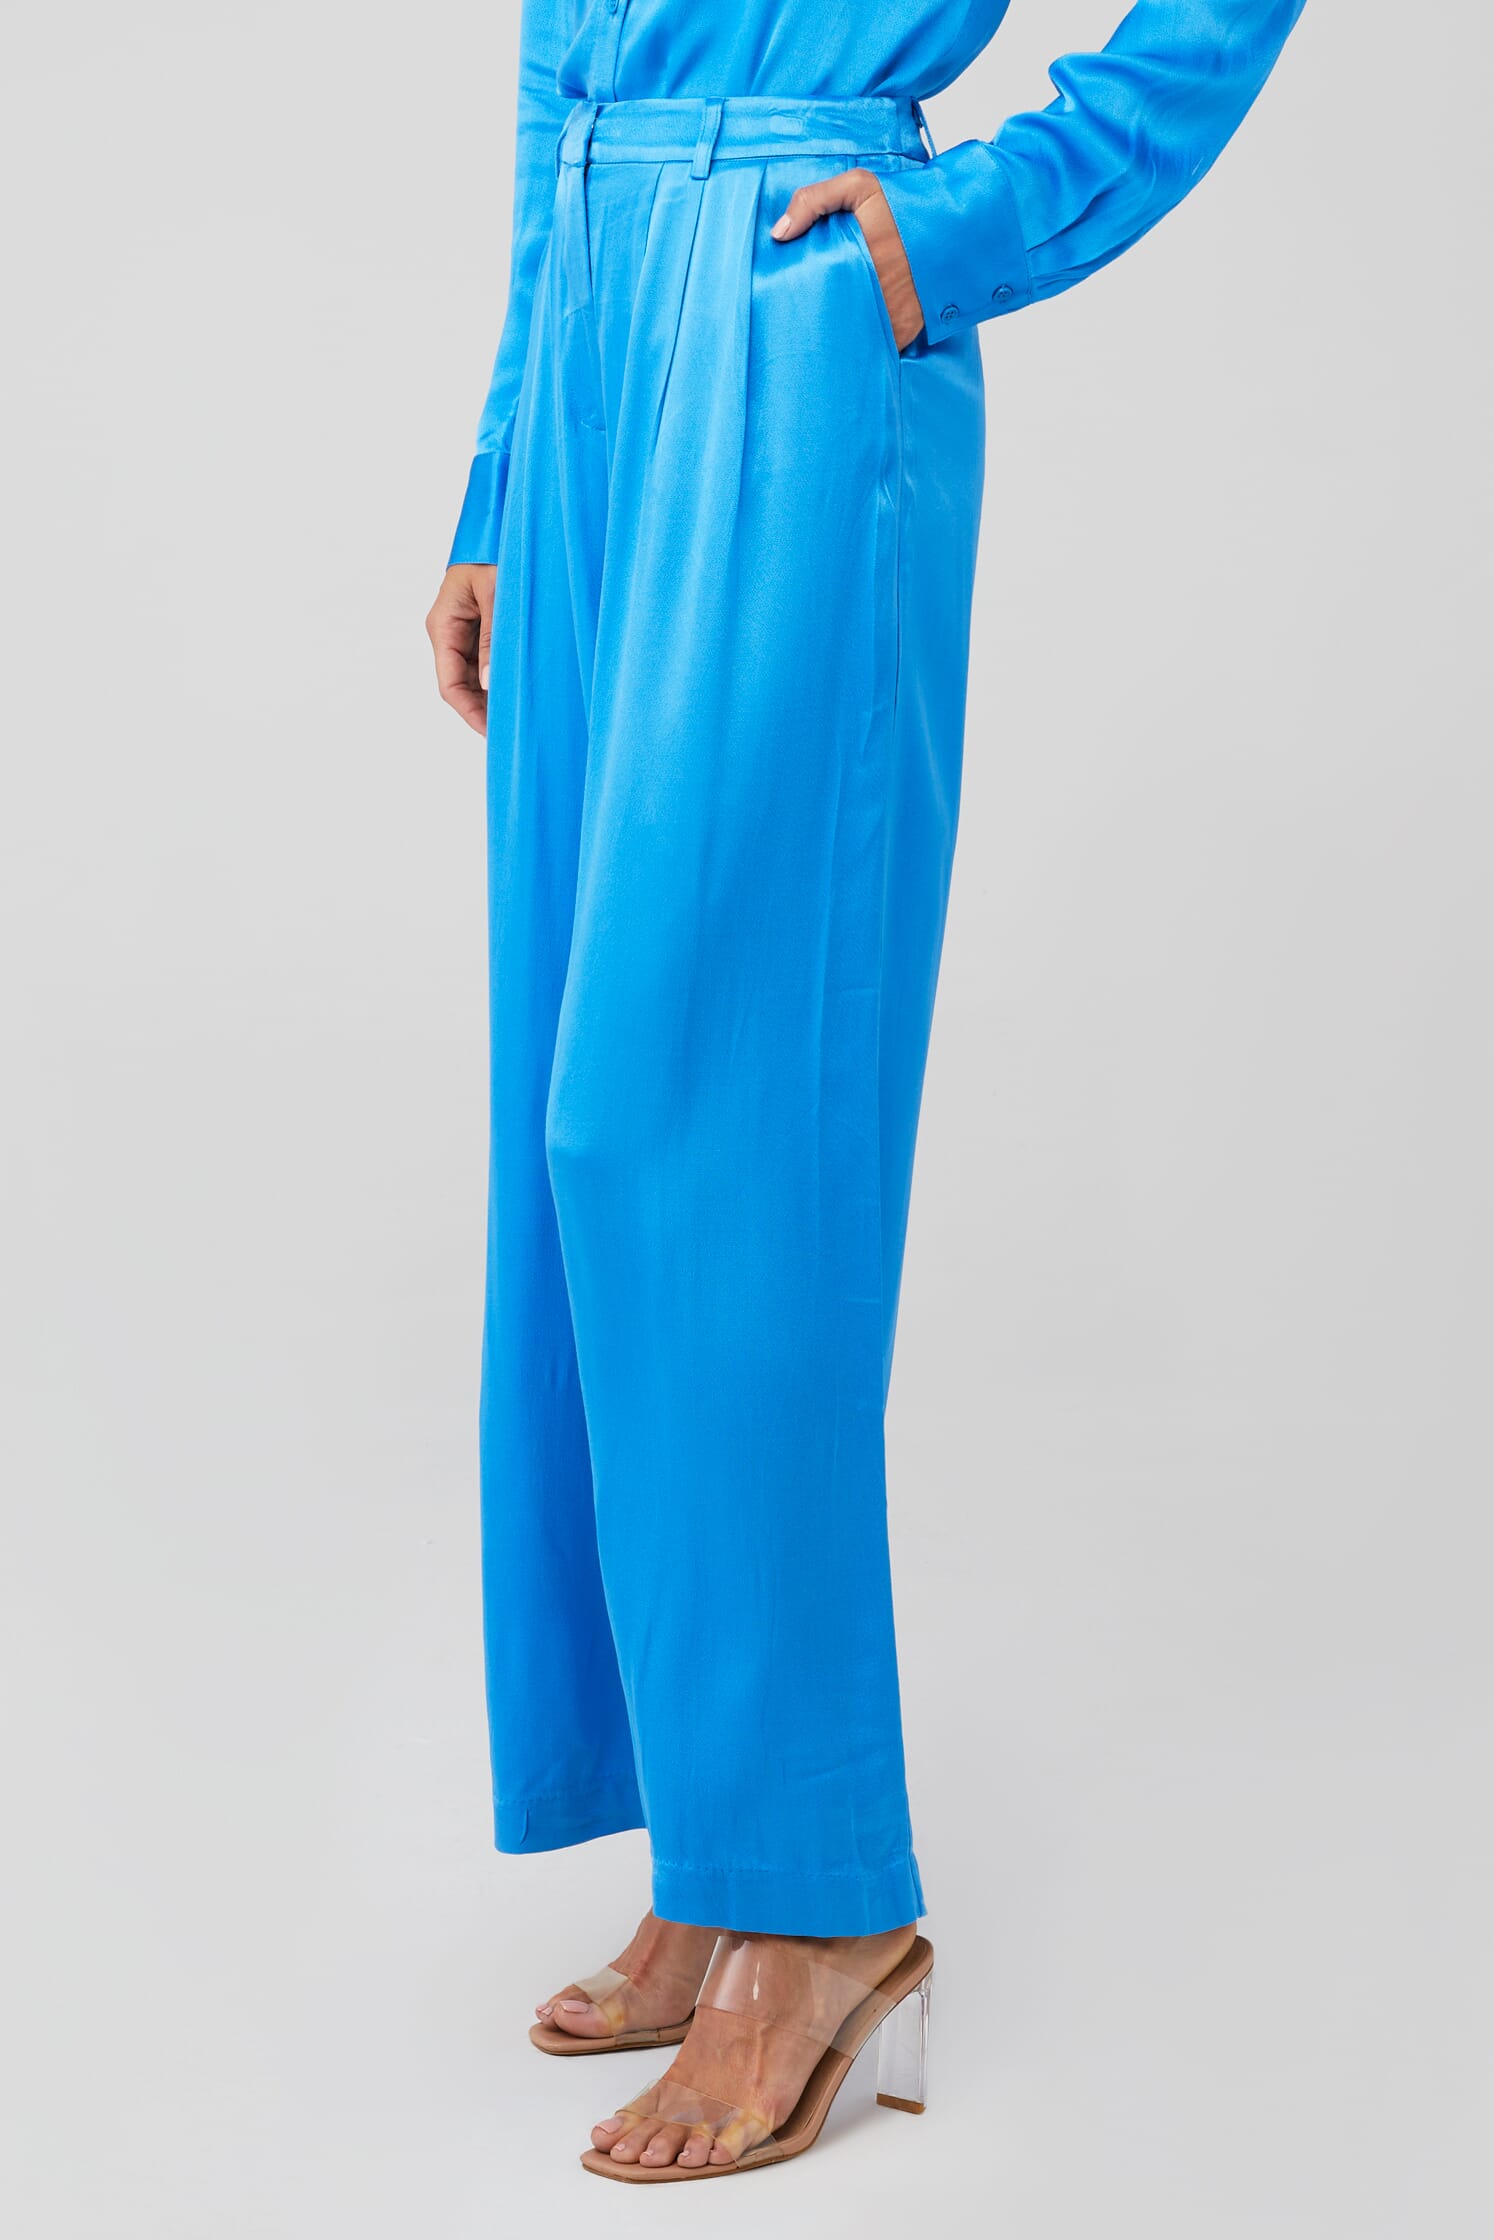 Bardot | Lena Pin Tuck Pant in Bold Blue| FashionPass